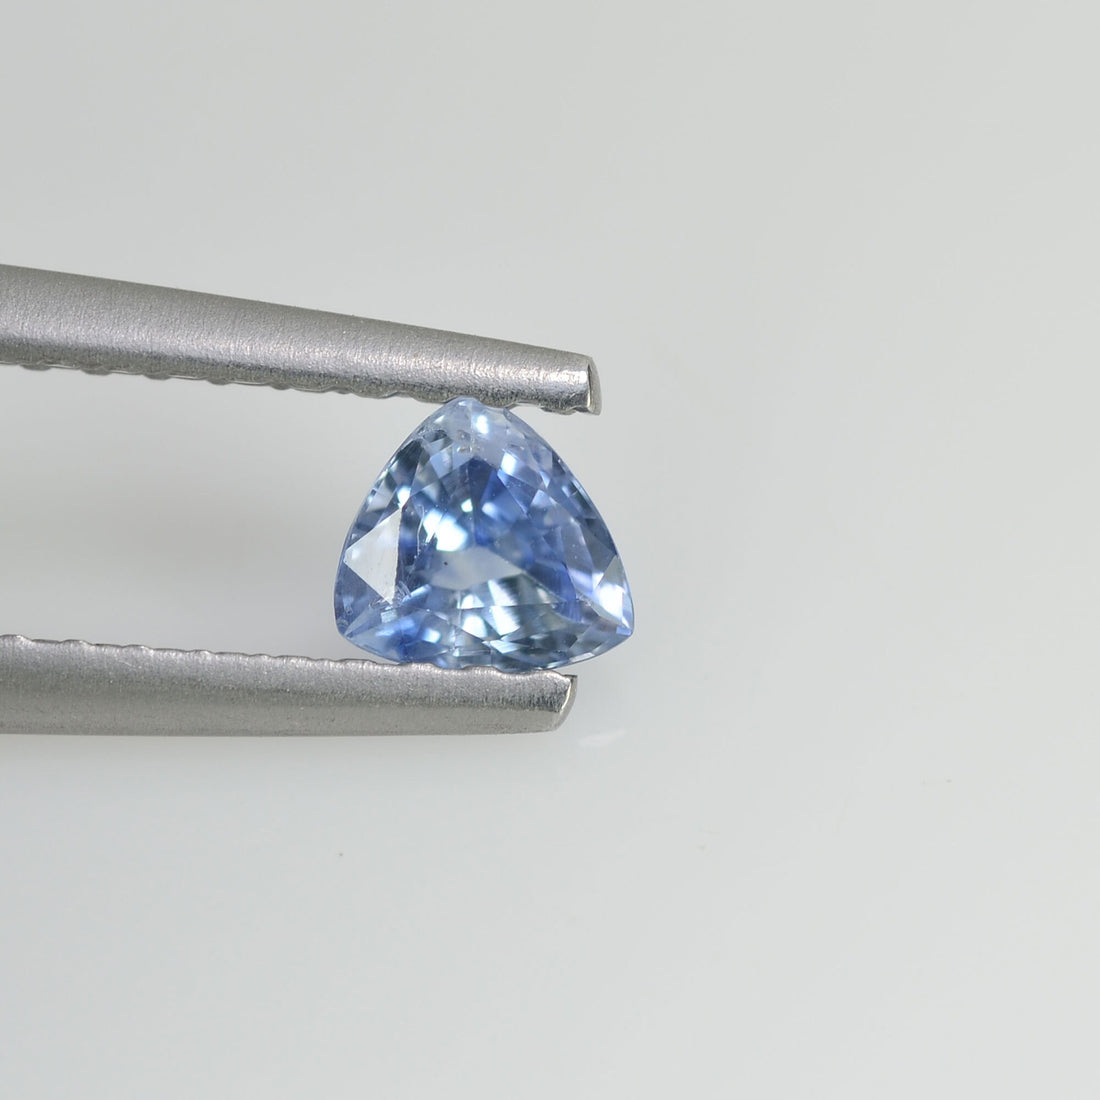 0.32 Cts Natural Blue Sapphire Loose Gemstone Trillion Cut